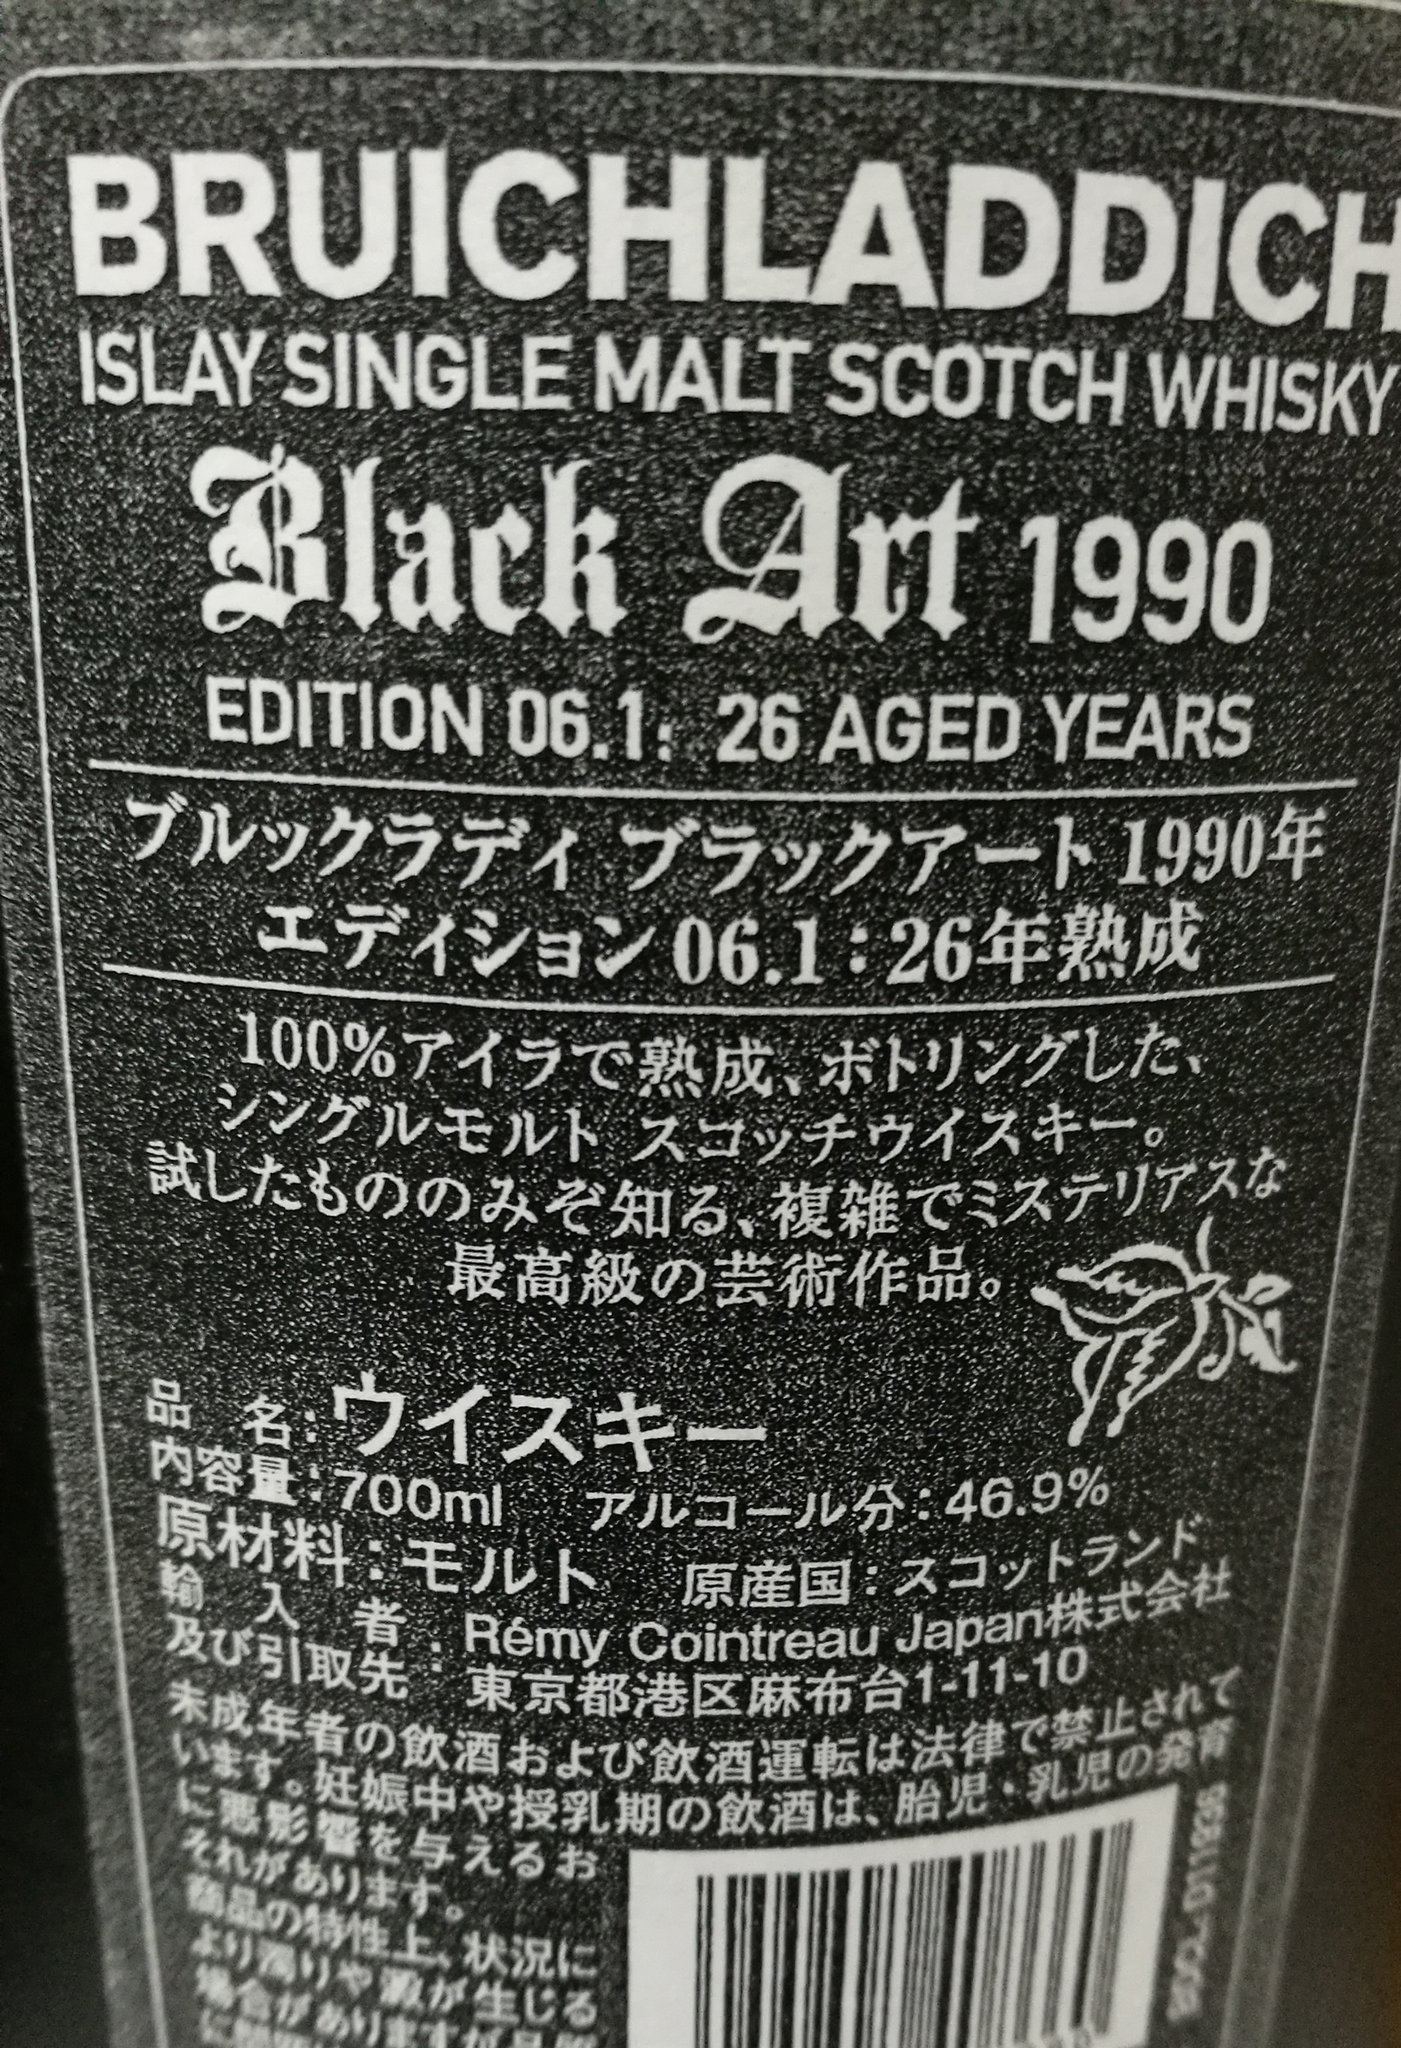 BRUICHLADDICH BLACK ART 1990（edition 06.1） - ウイスキー